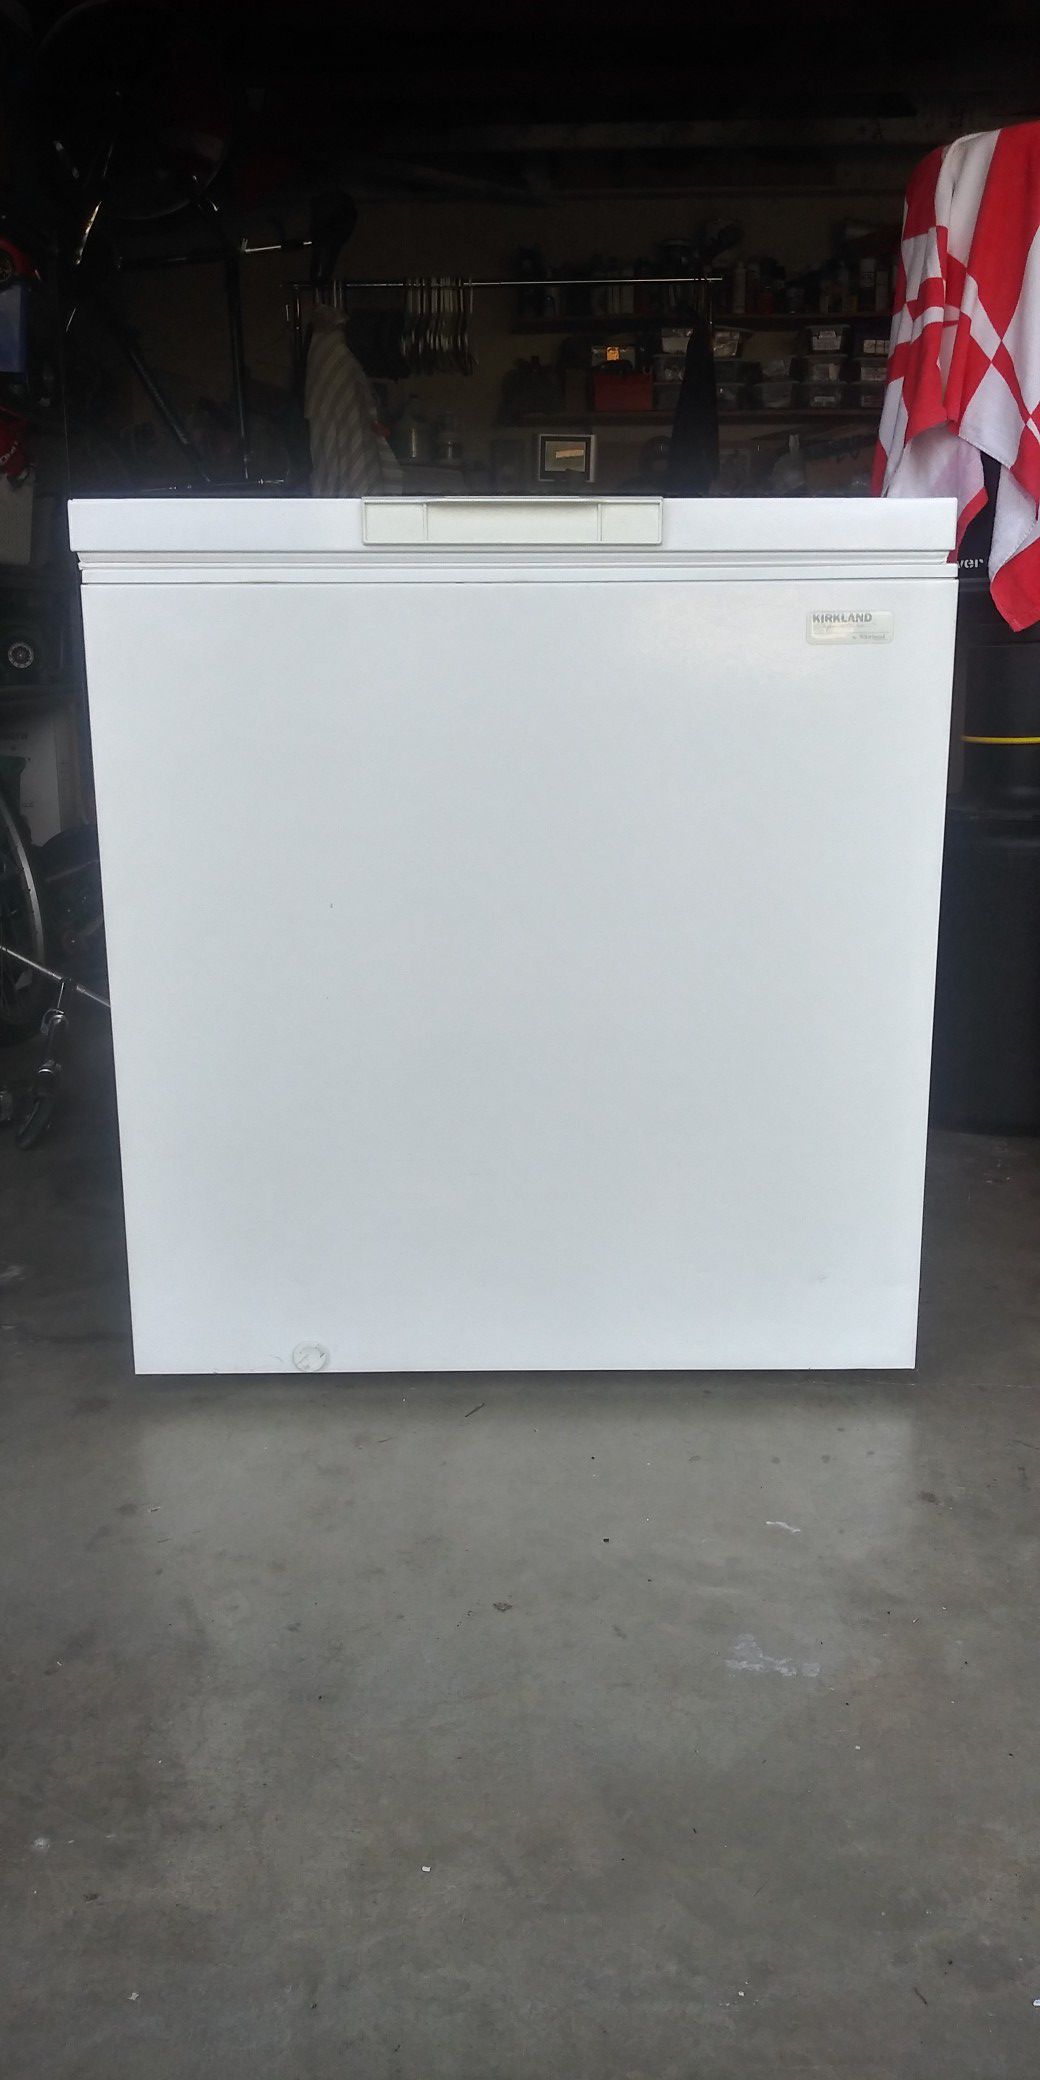 Kirkland Signature 7.0 cubic foot chest freezer